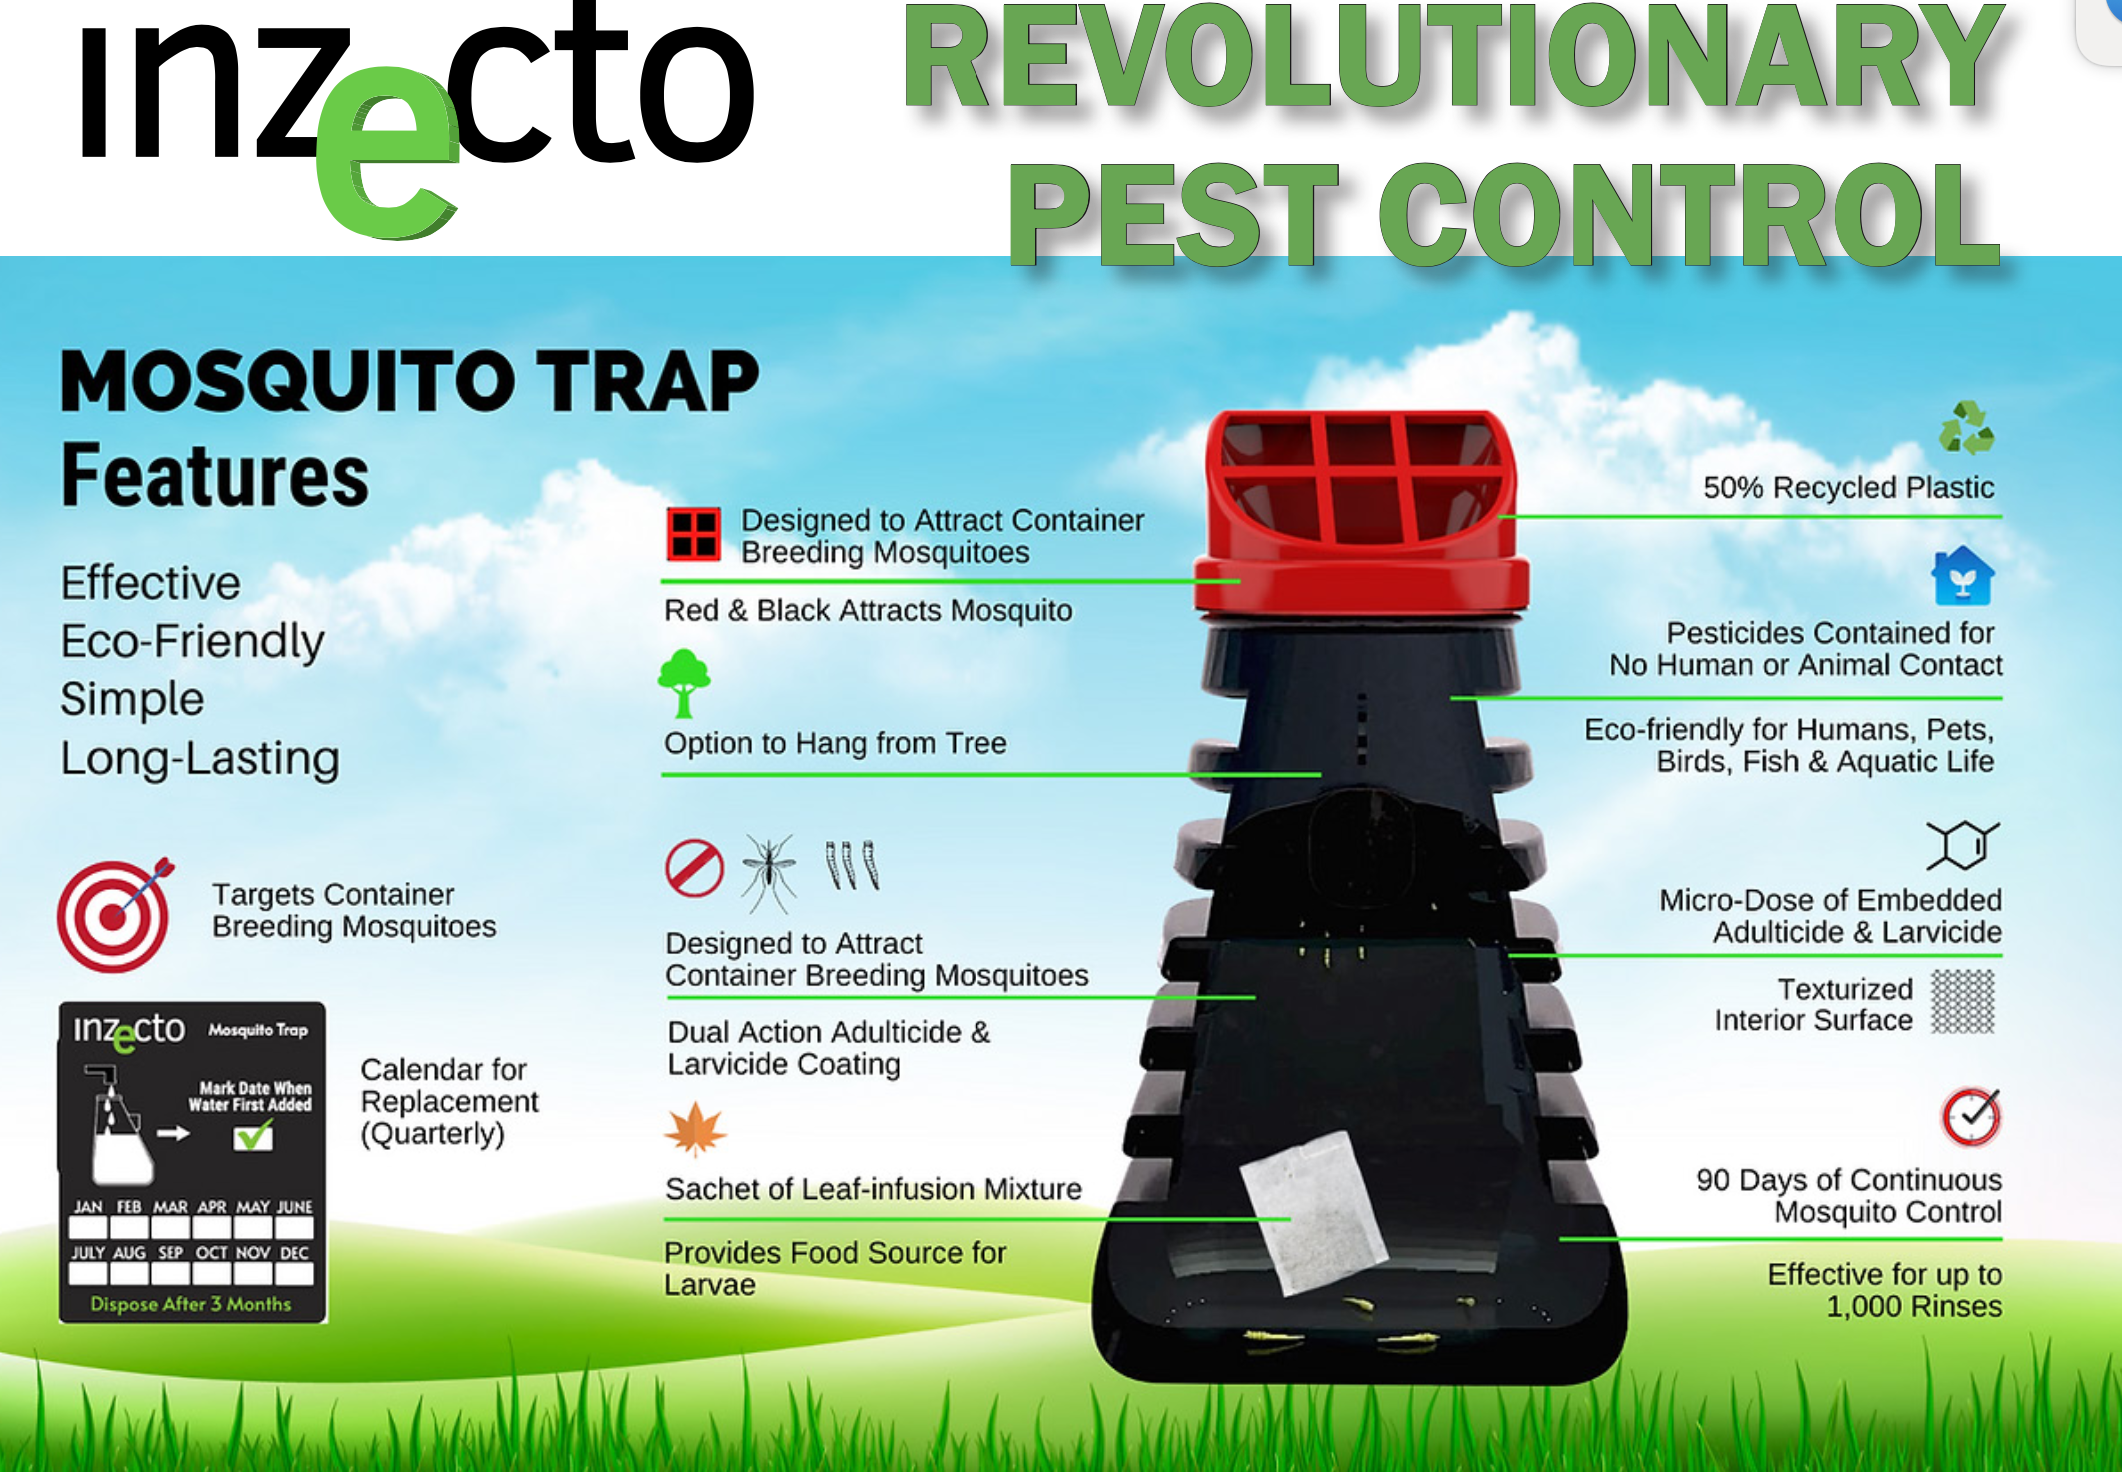 Vertical Sign - Pesticide - Animal Pest Control In Progress Traps